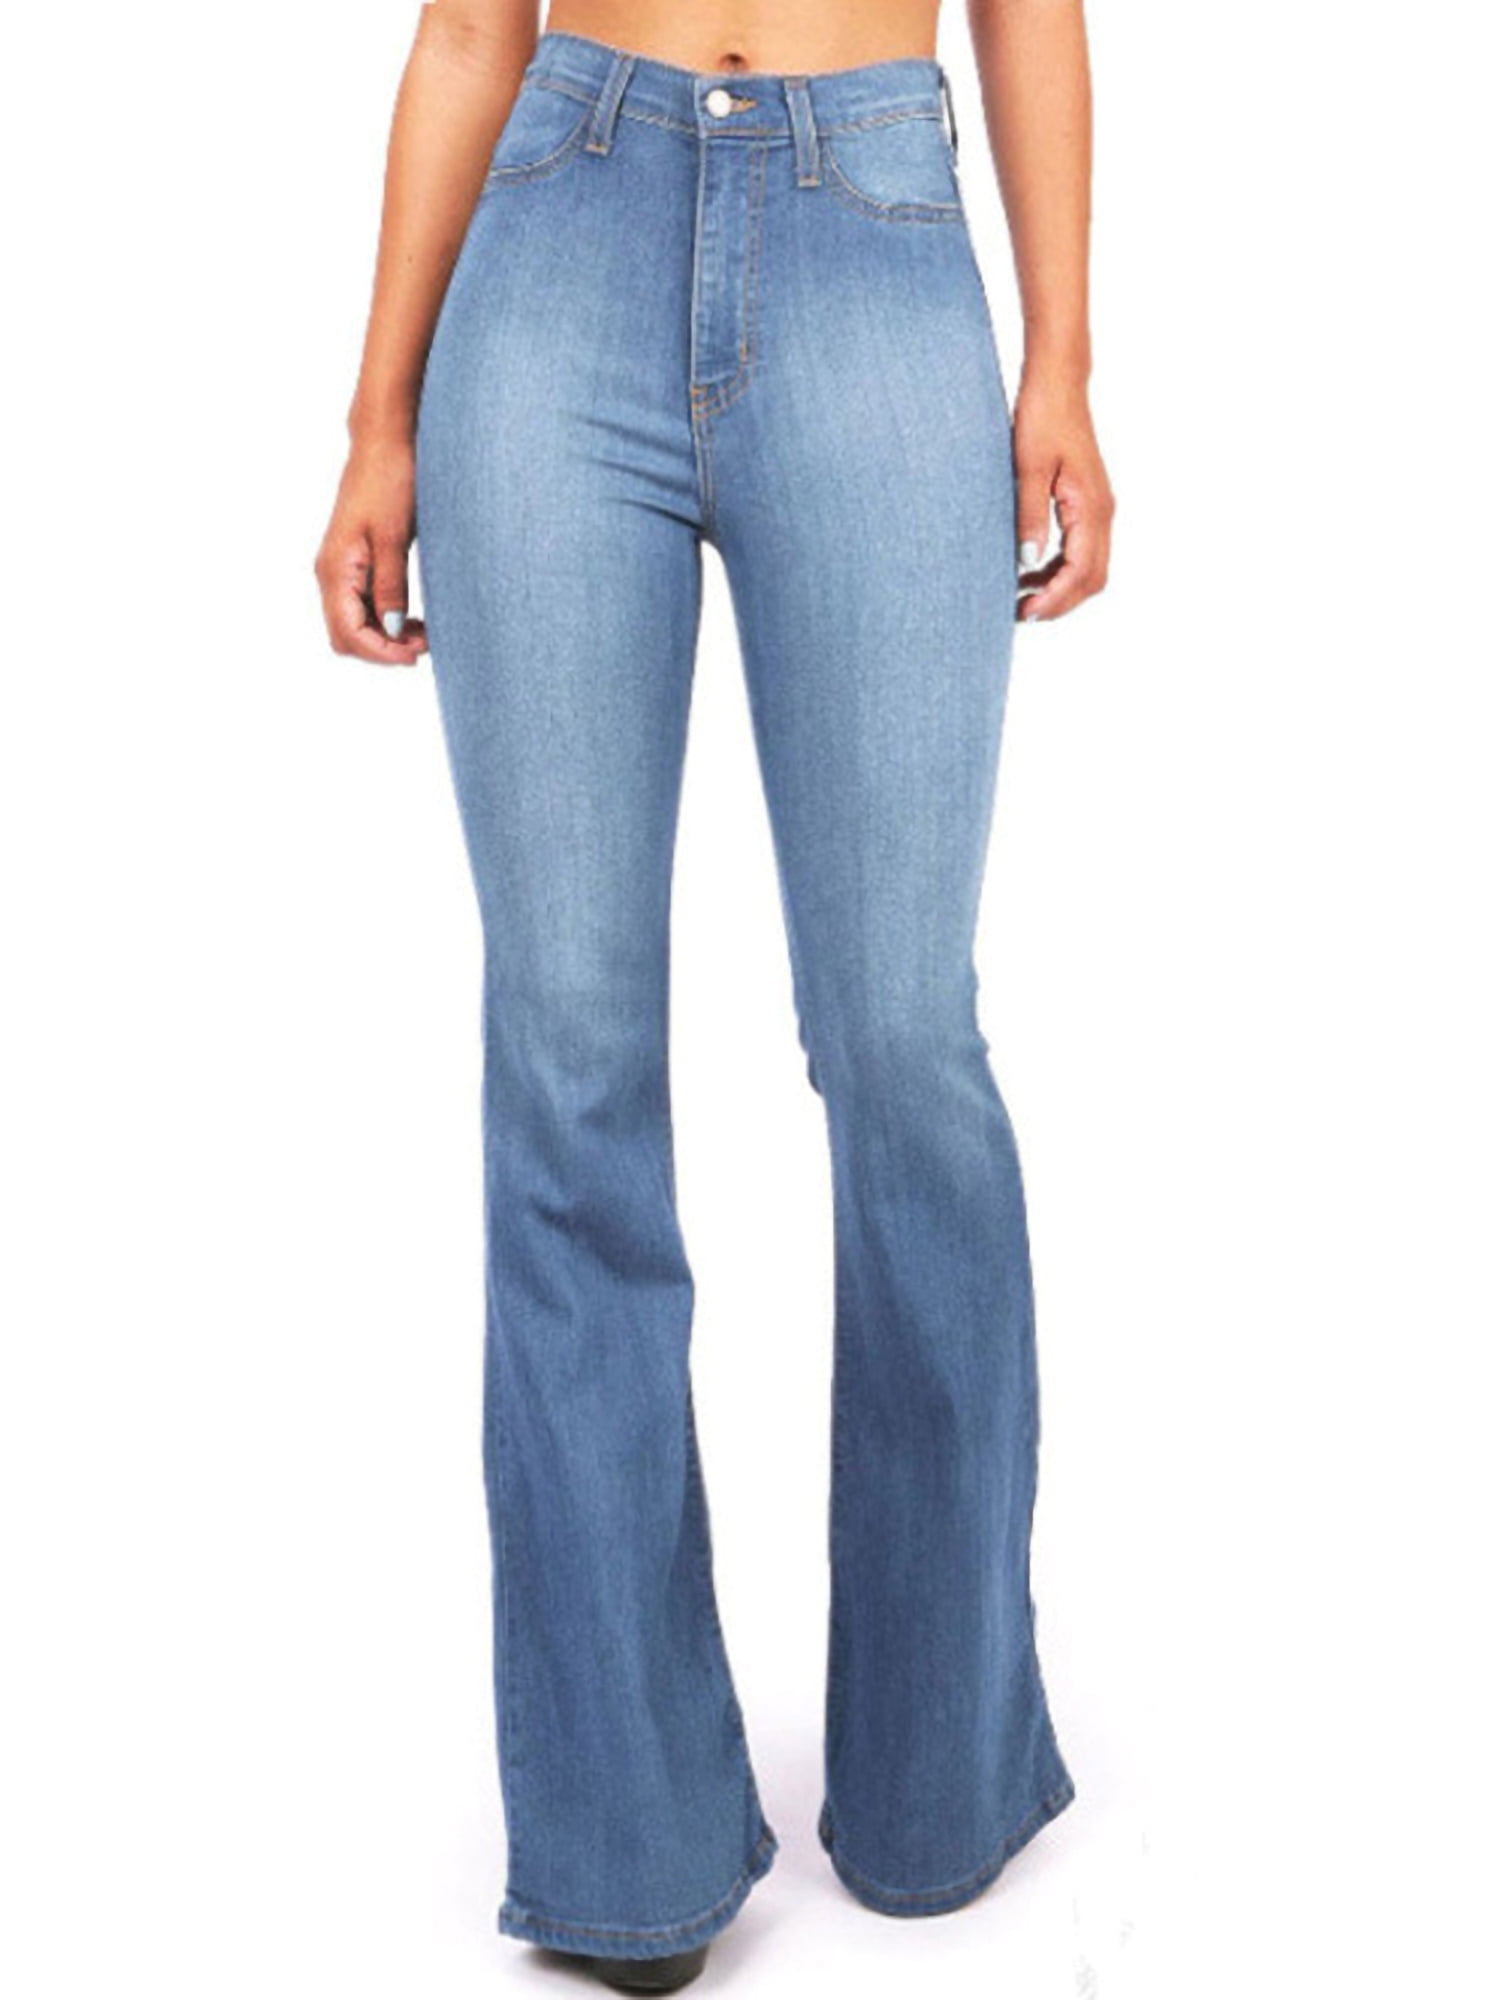 Flare Jeans for Women Casual High Waist Denim Pants Boot Cut Jeans Blue  S-3XL